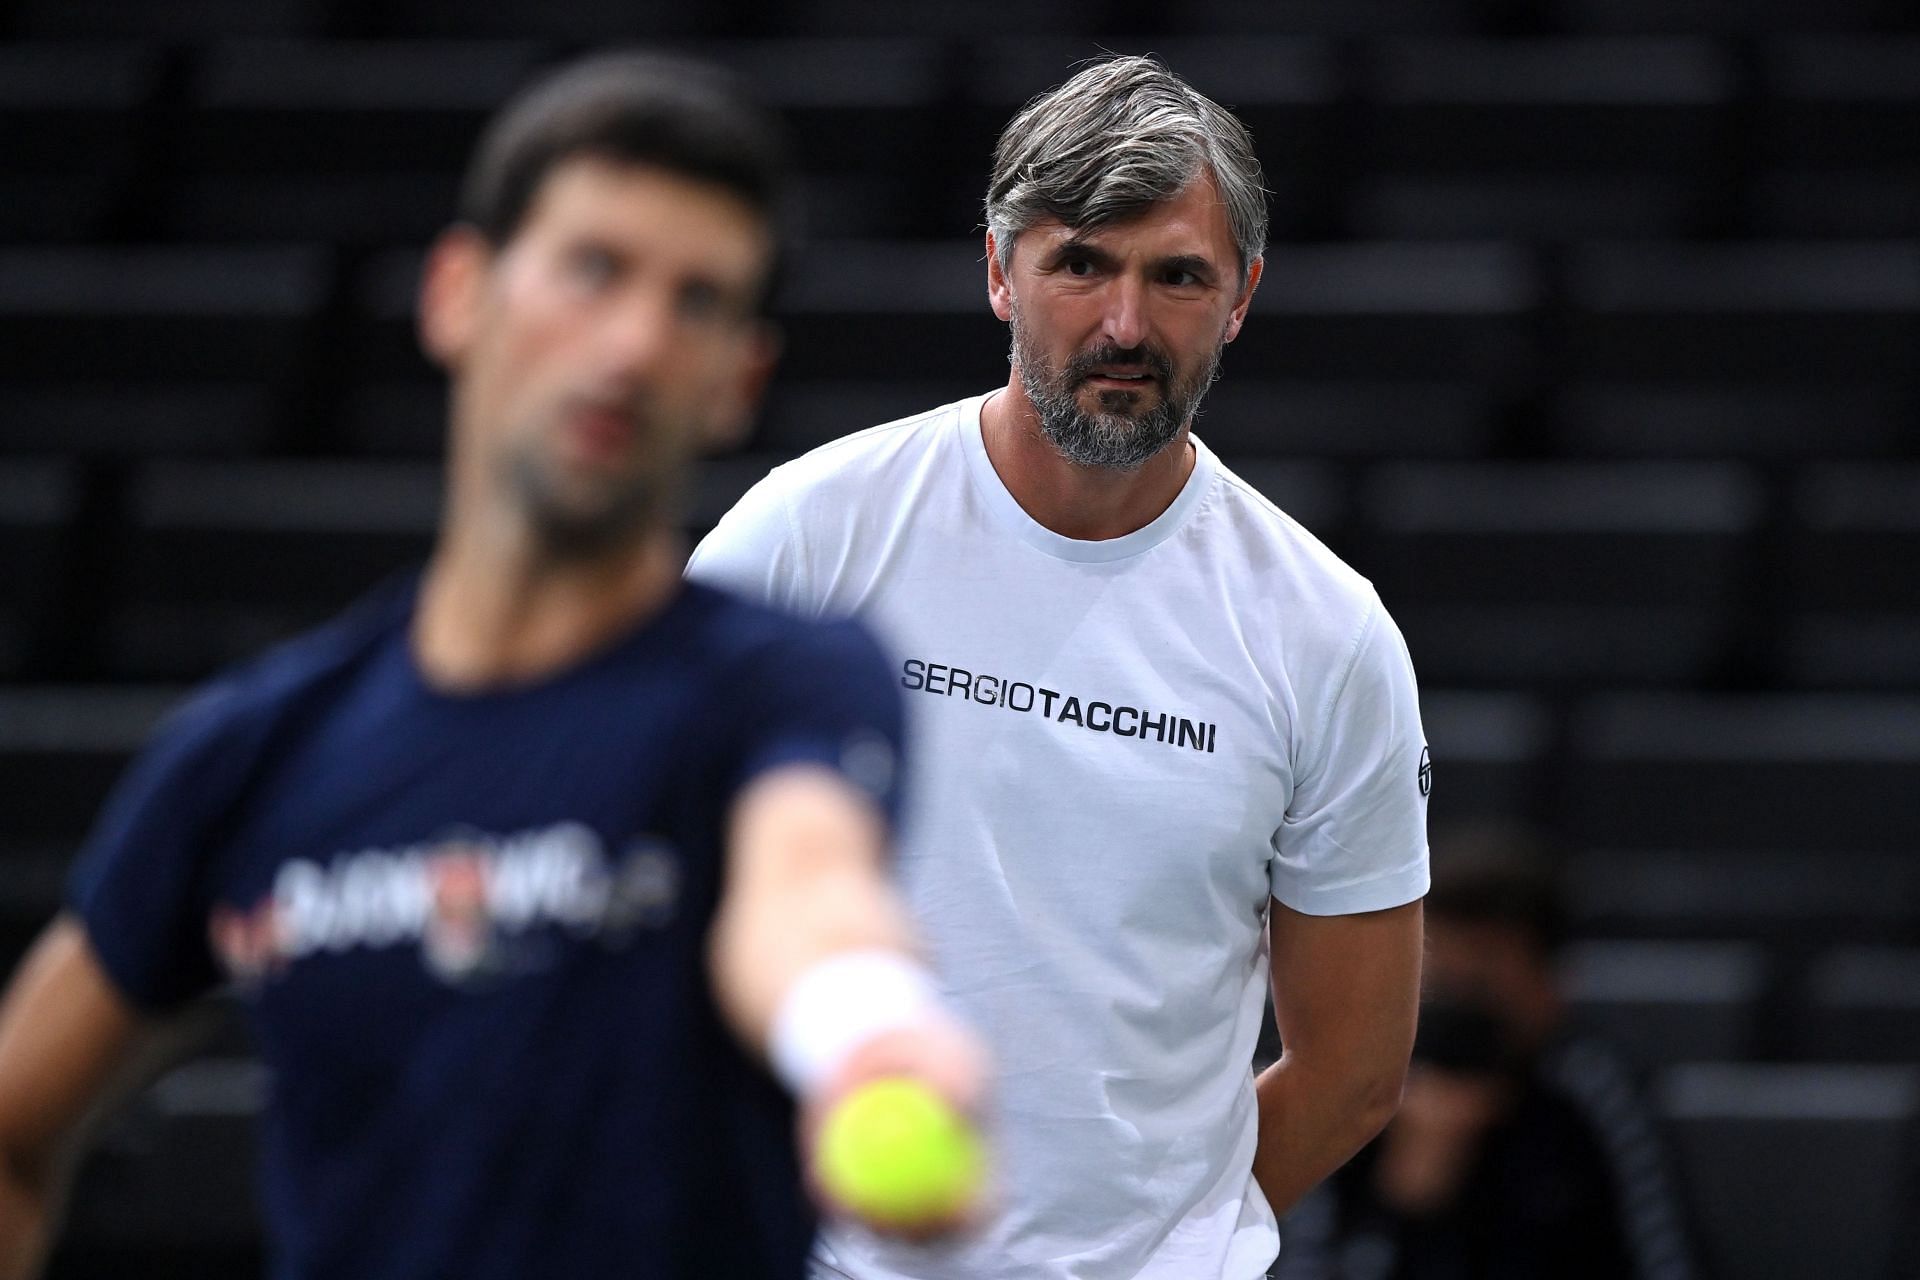 Ivanisevic feels that Novak Djokovic played his best tennis at Wimbledon